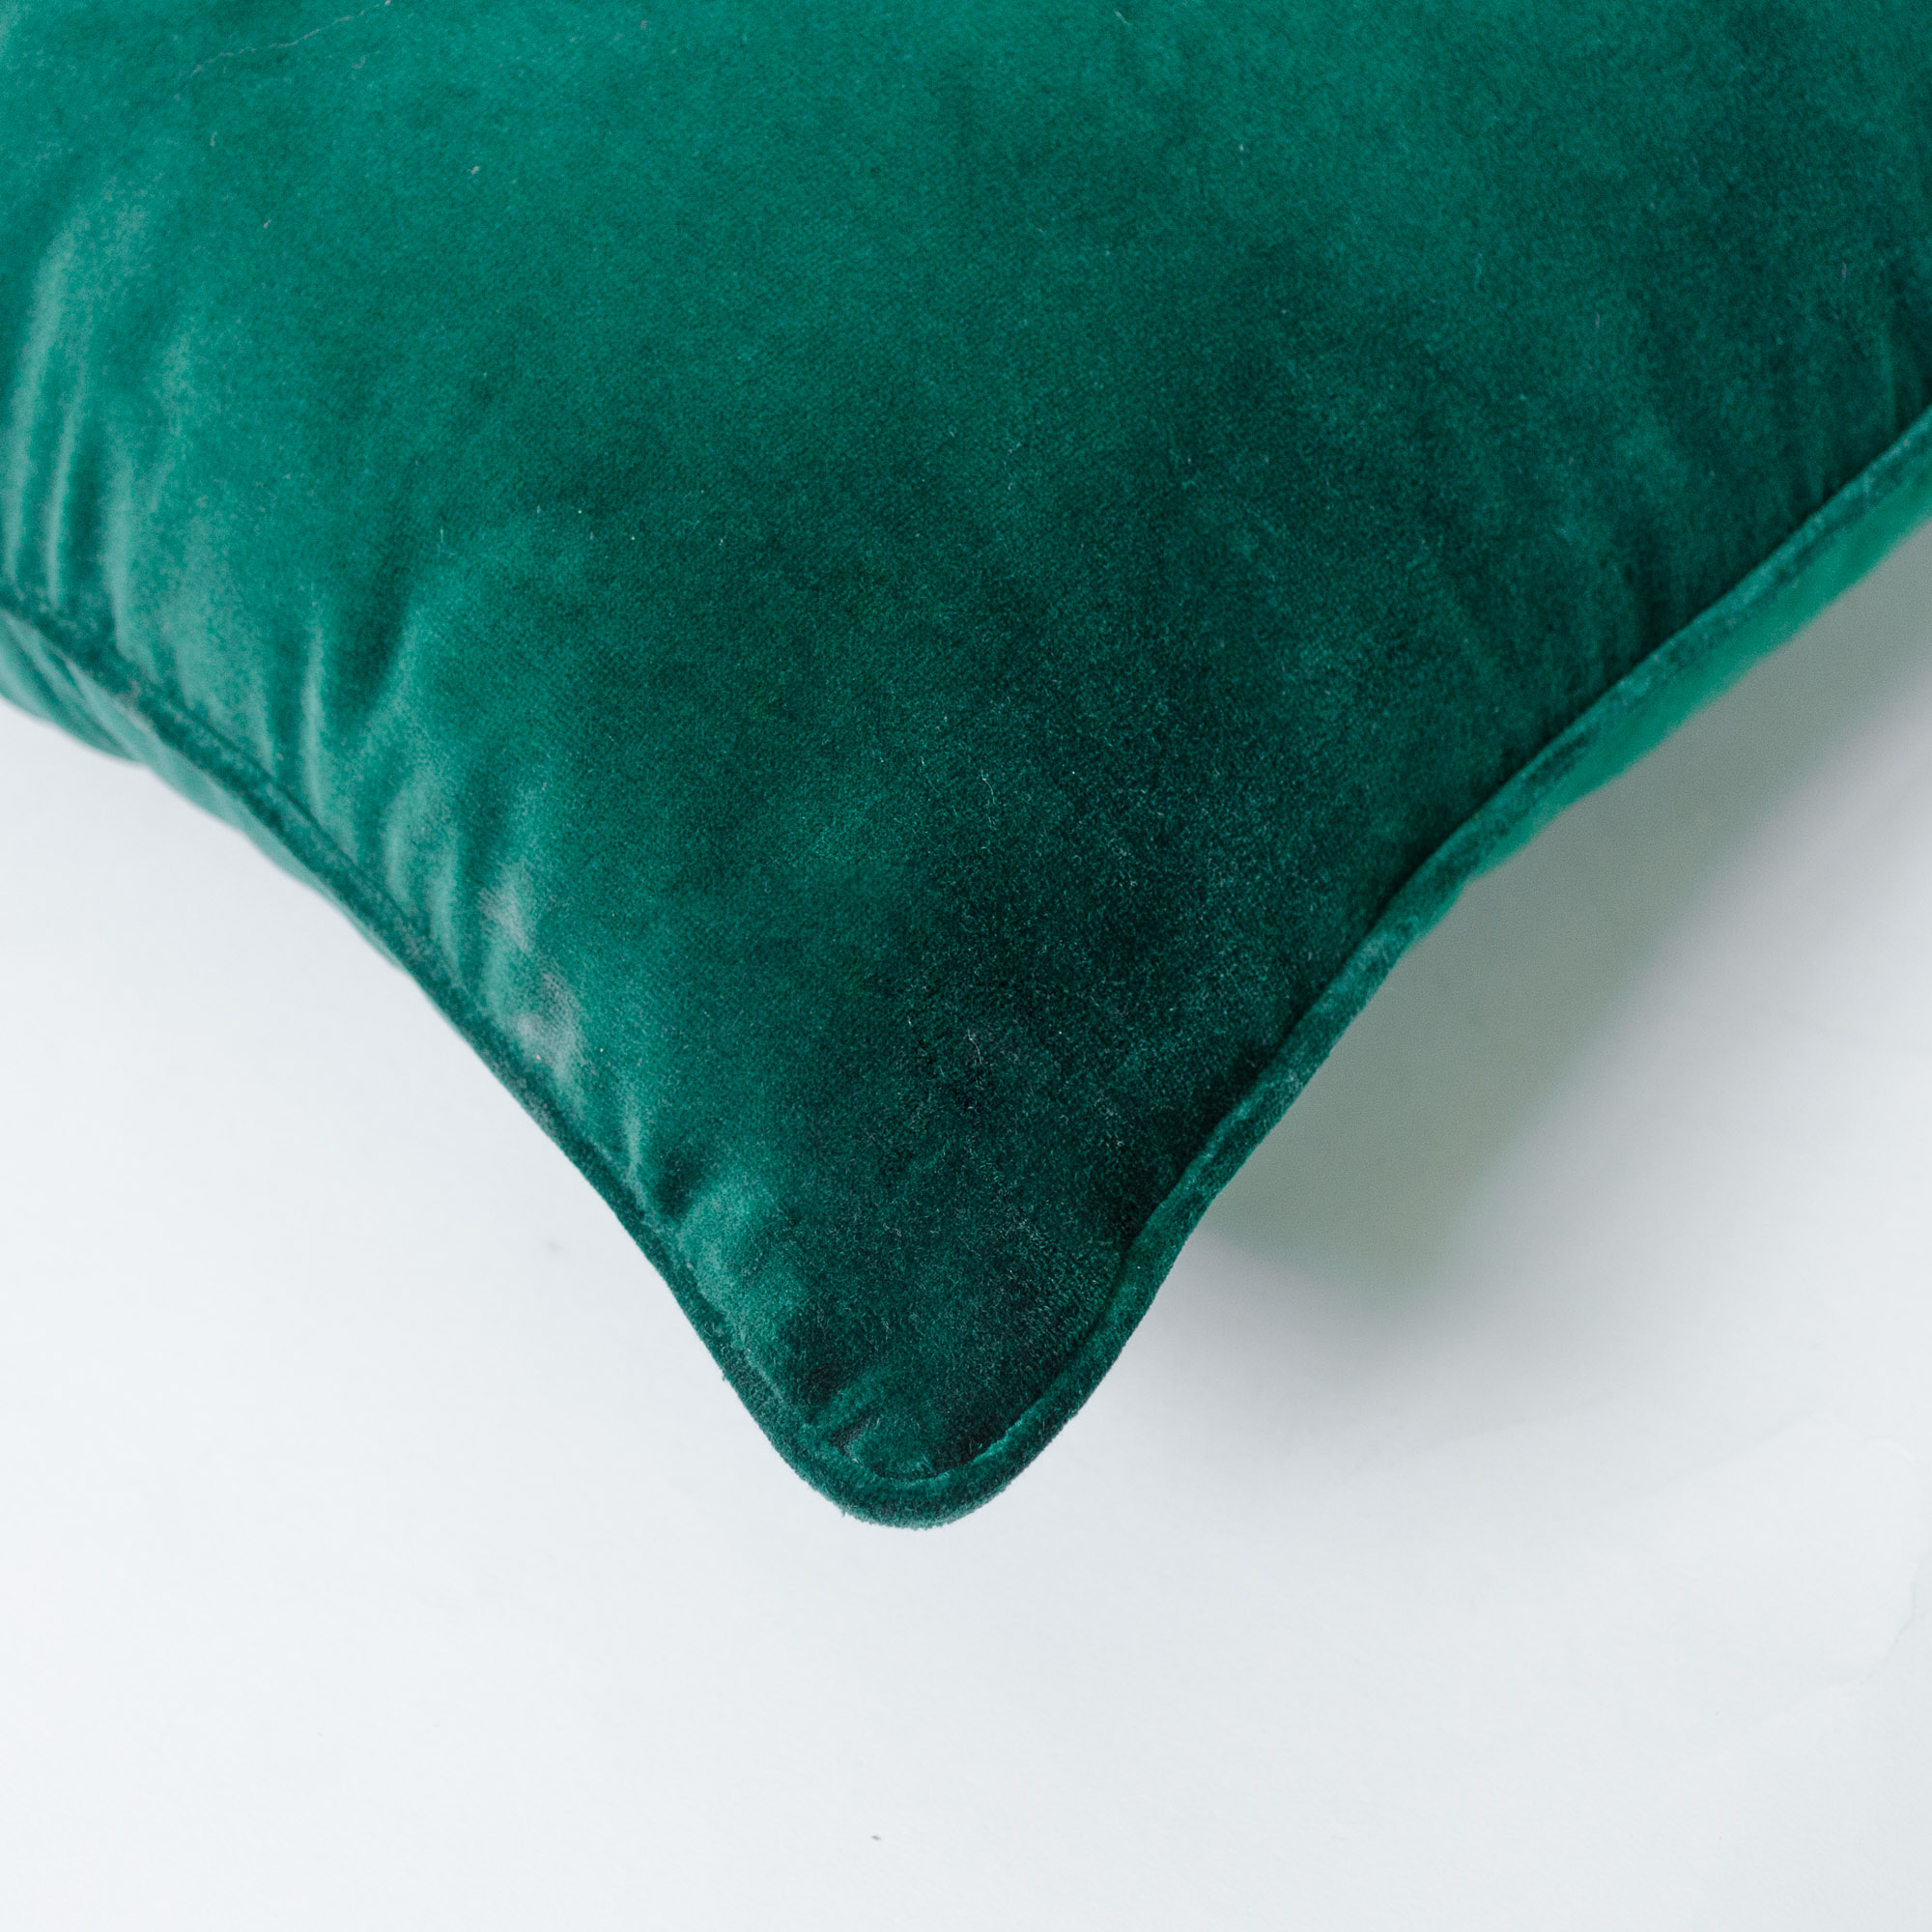 A Green Landscape Cushion Cover